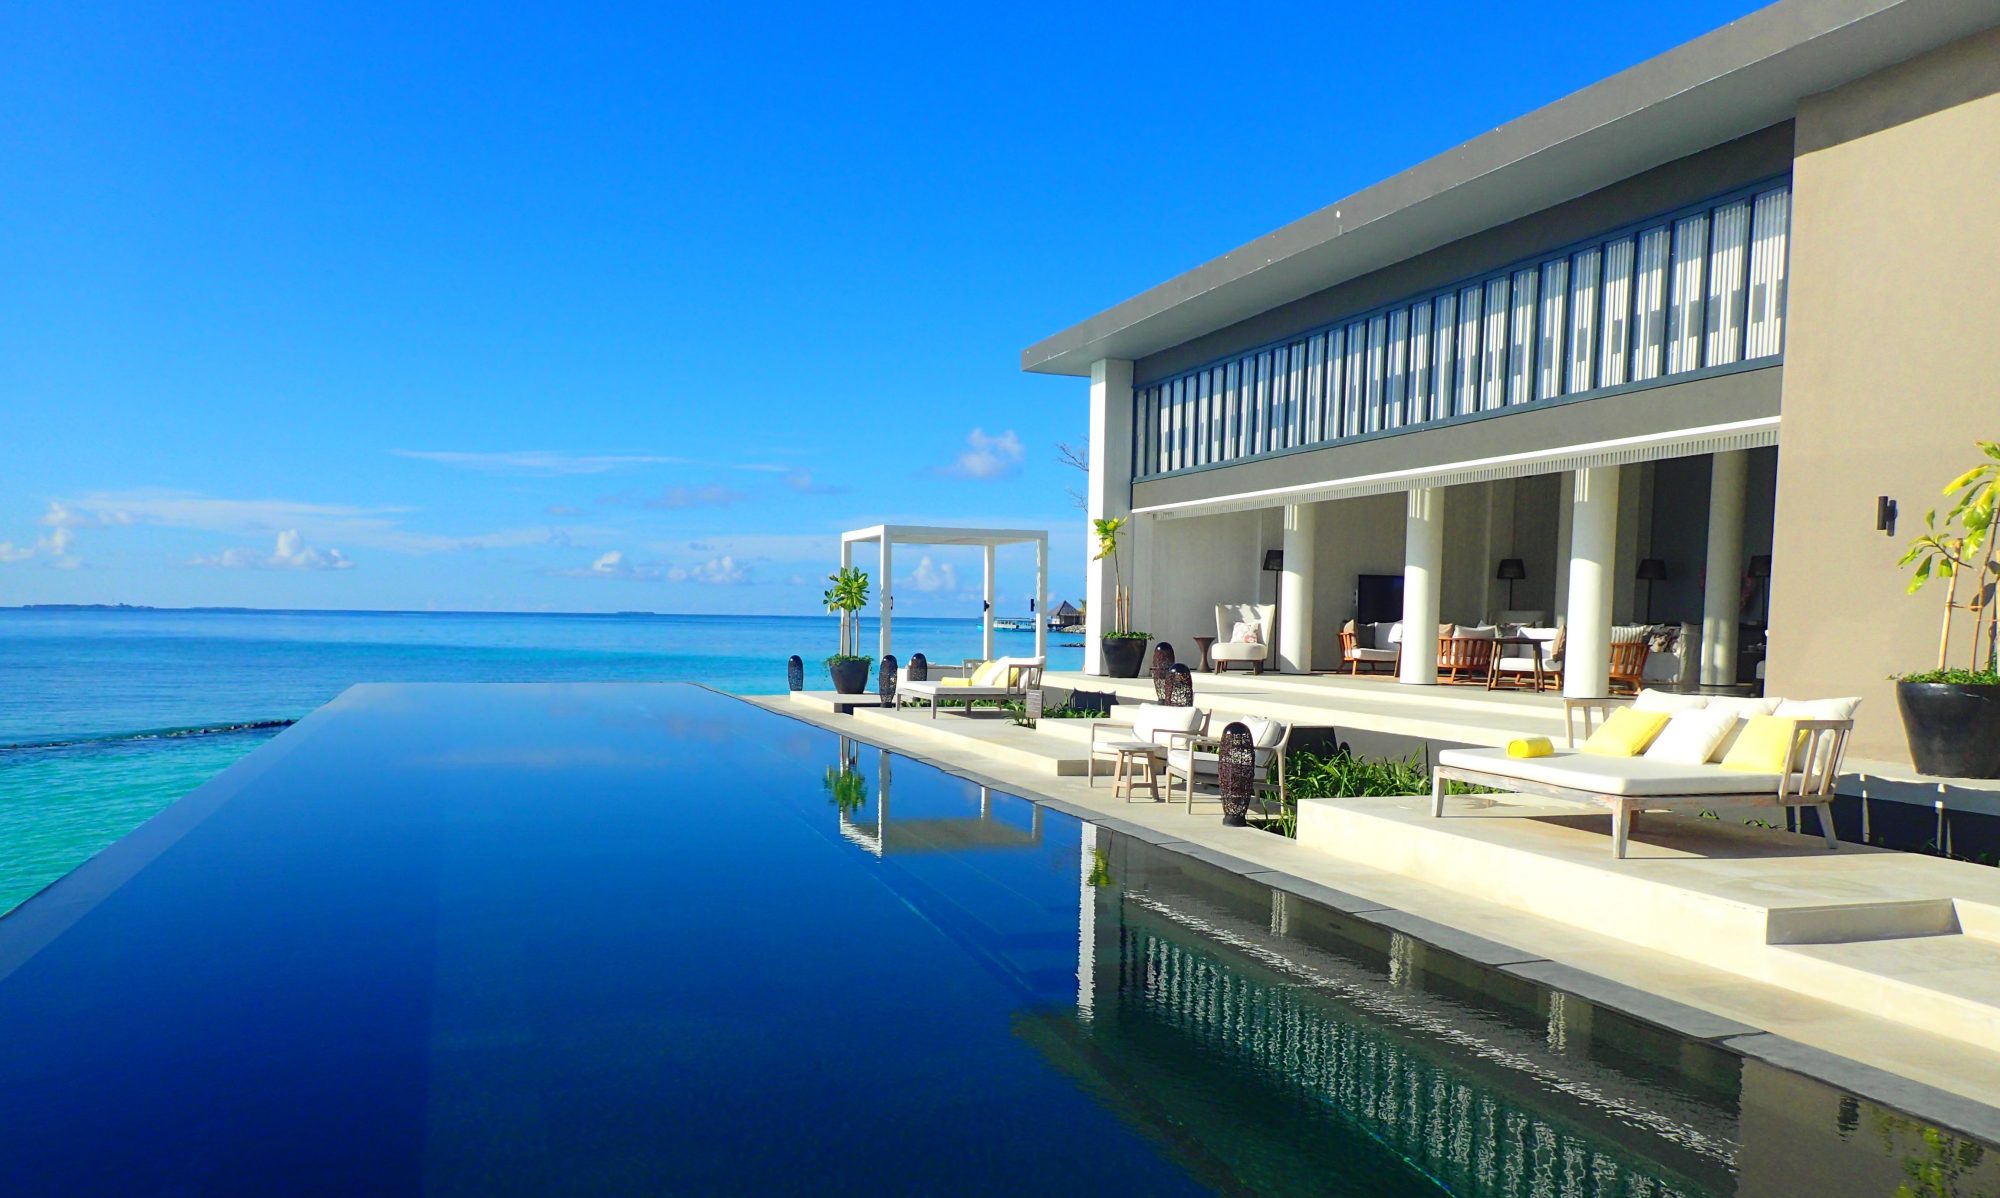 Cheval Blanc Randheli - Maldives Luxury Villas